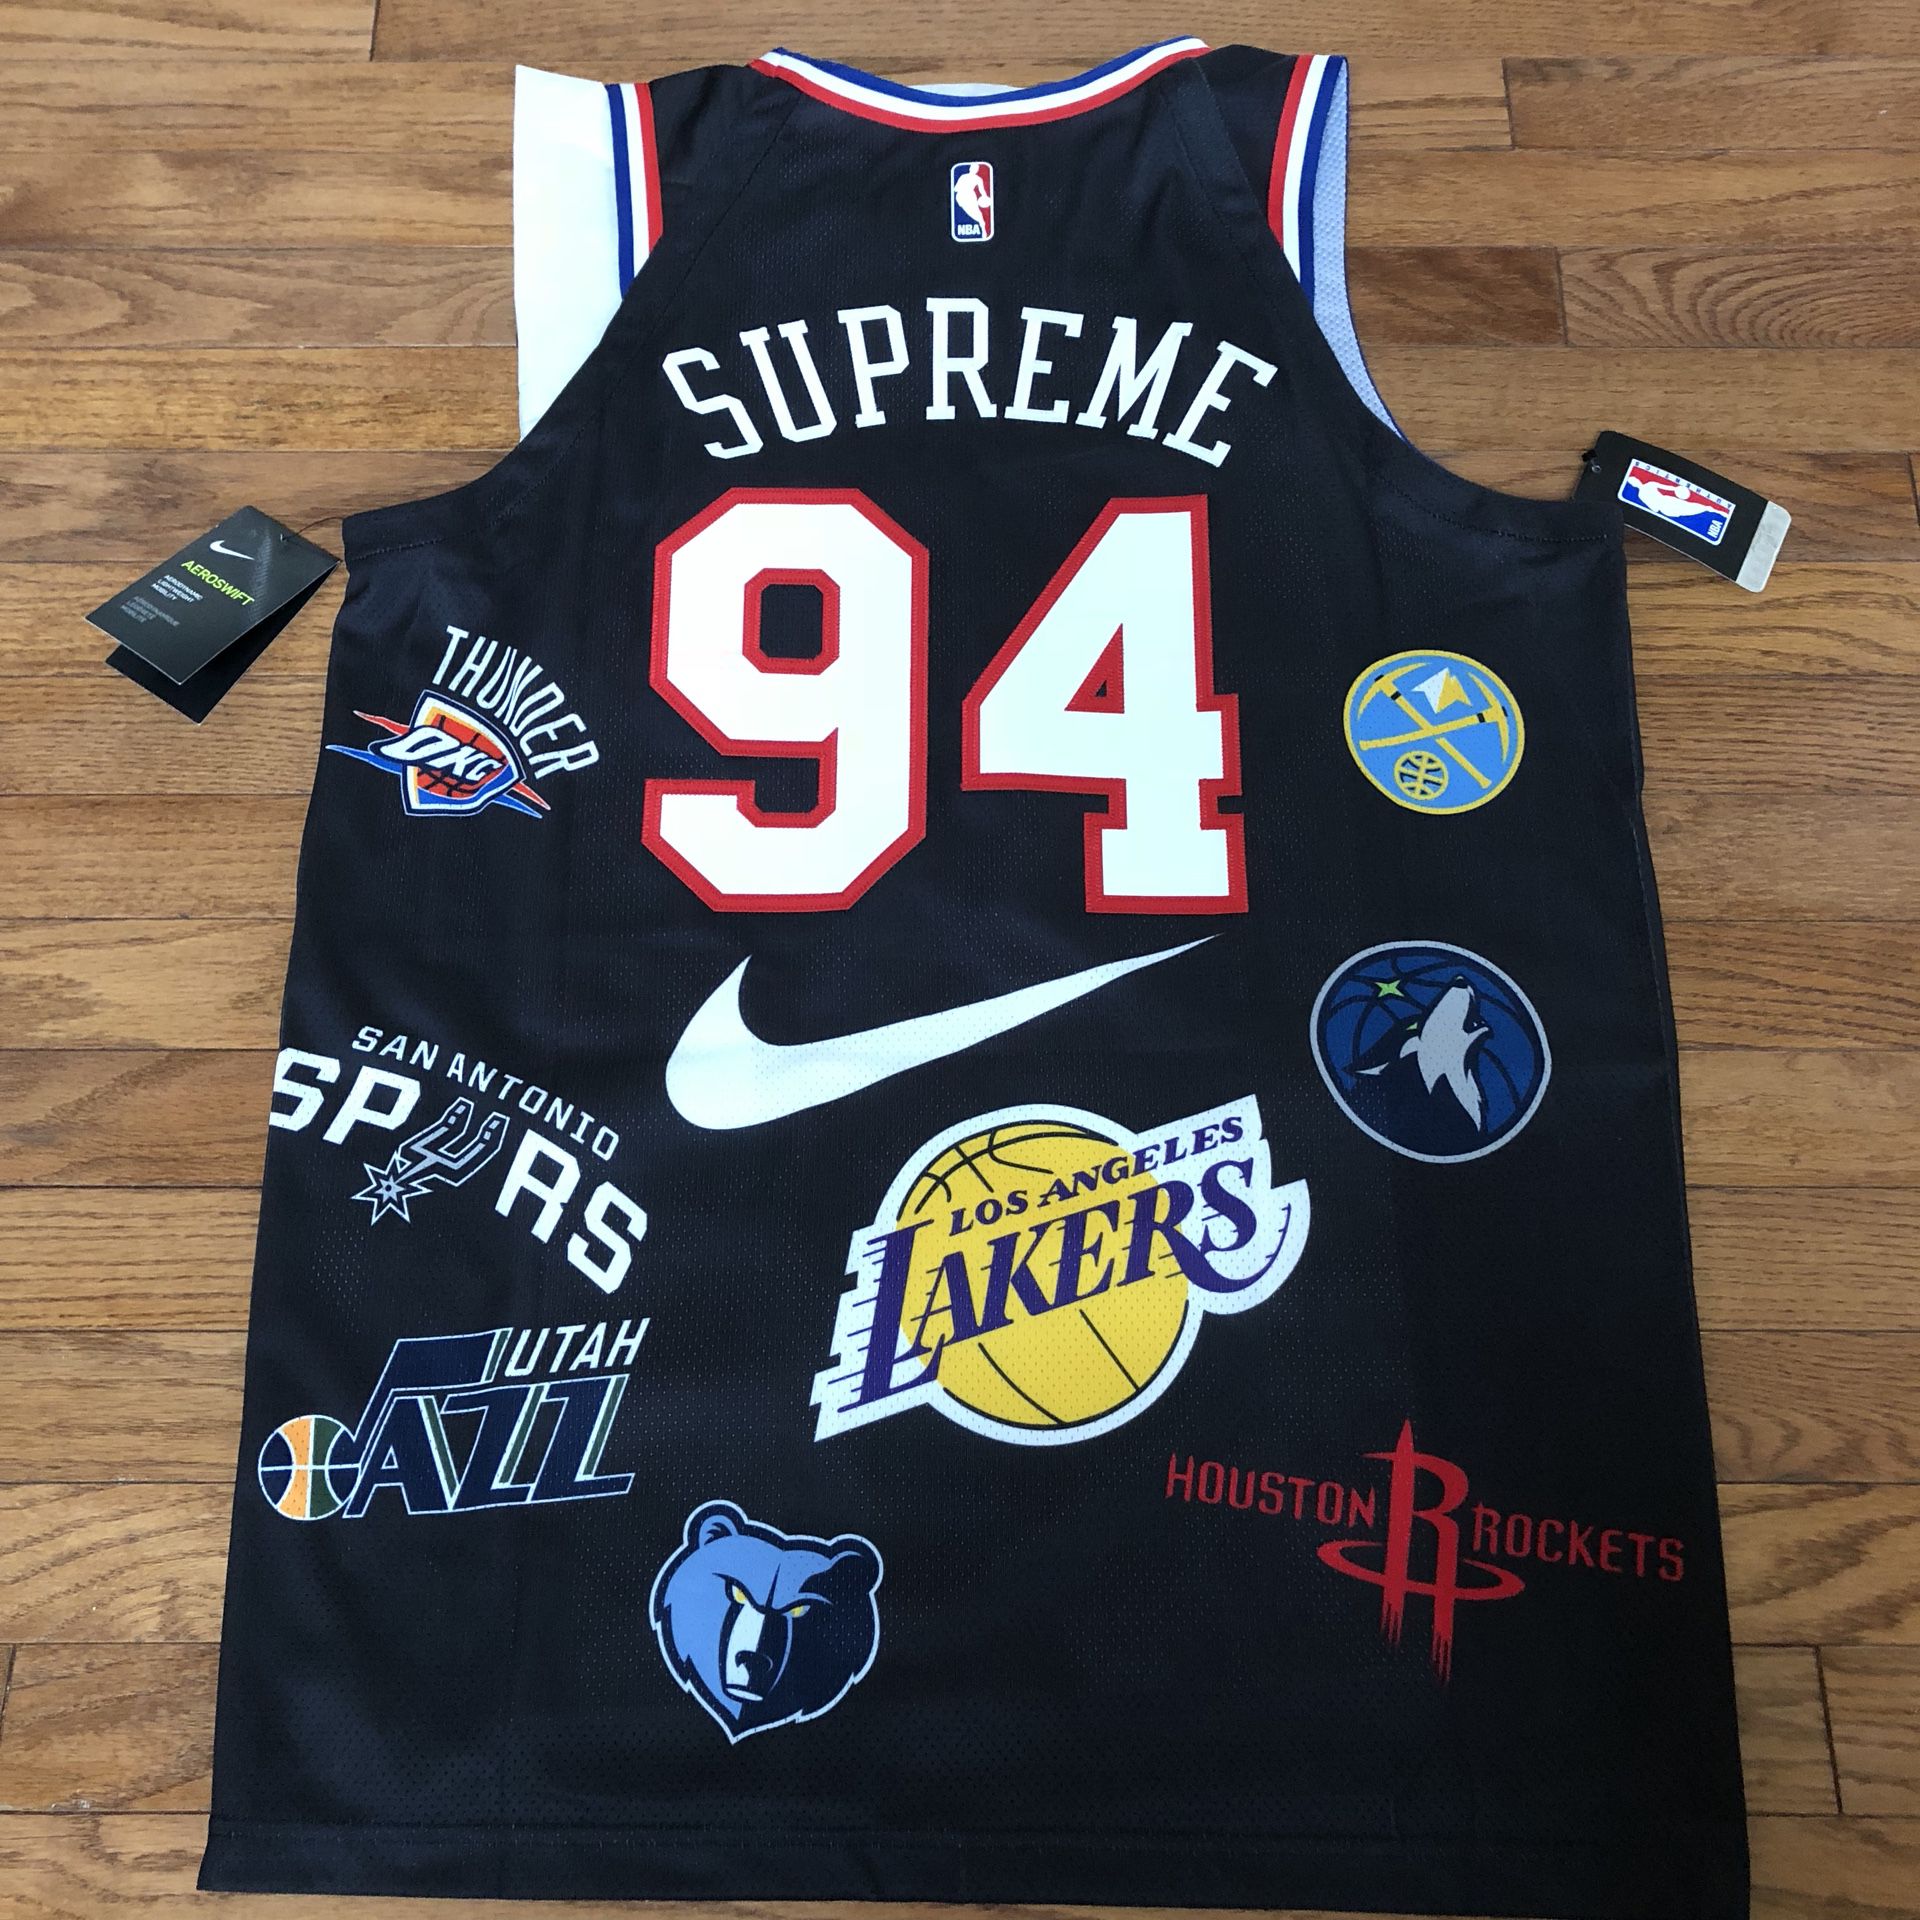 Brand new Supreme Nike NBA jersey black size large 48